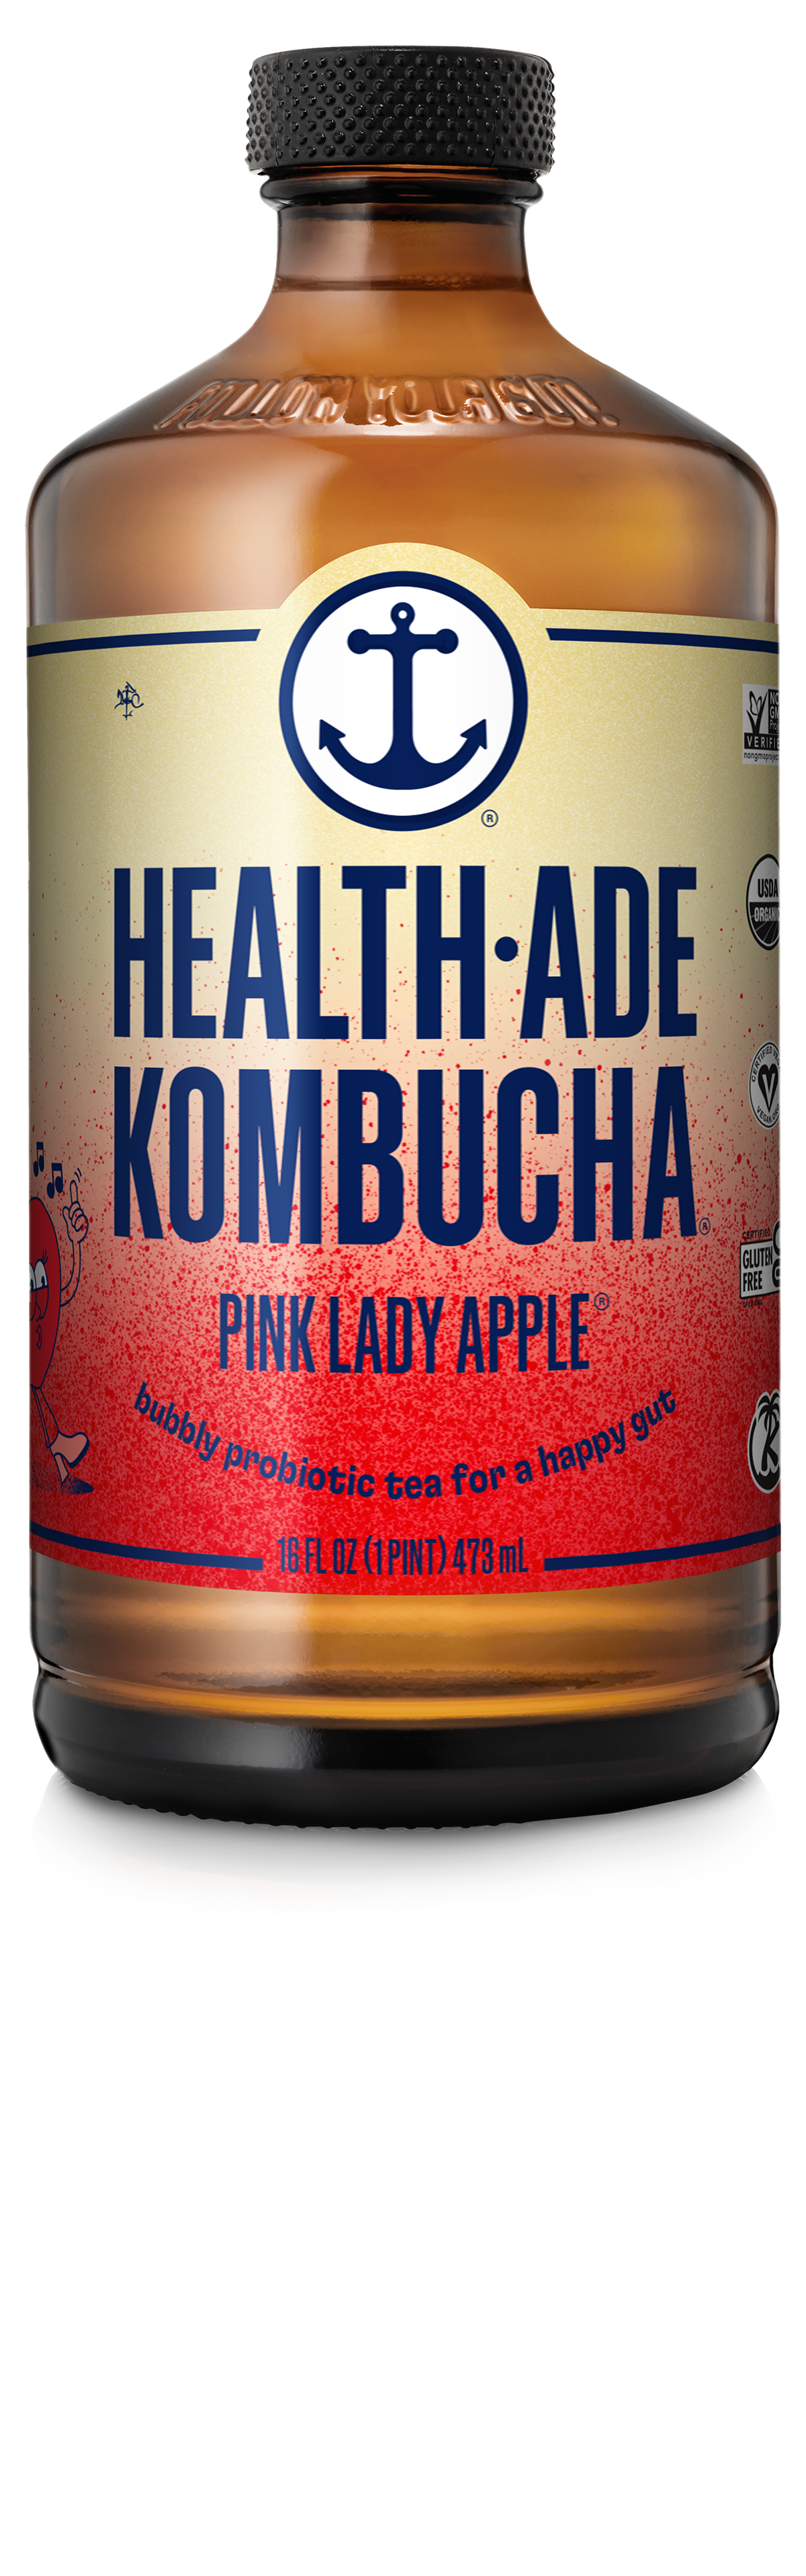 Health-Ade Pink Lady Apple Kombucha 12 units per case 16.0 fl